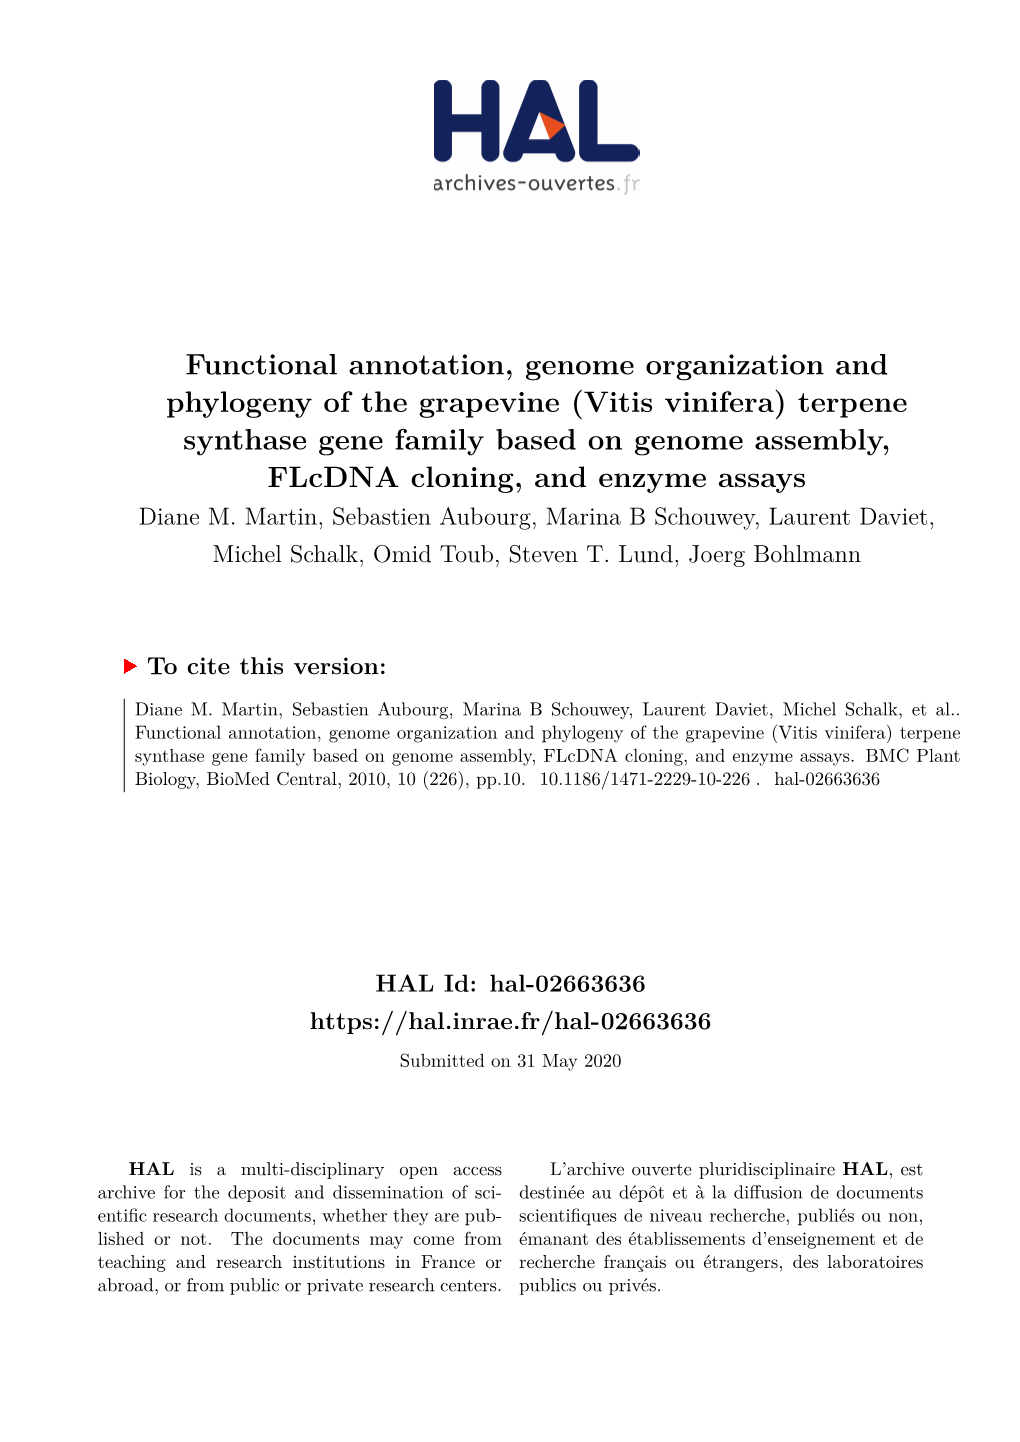 (Vitis Vinifera) Terpene Synthase Gene Family Based on Genome Assembly, Flcdna Cloning, and Enzyme Assays Diane M